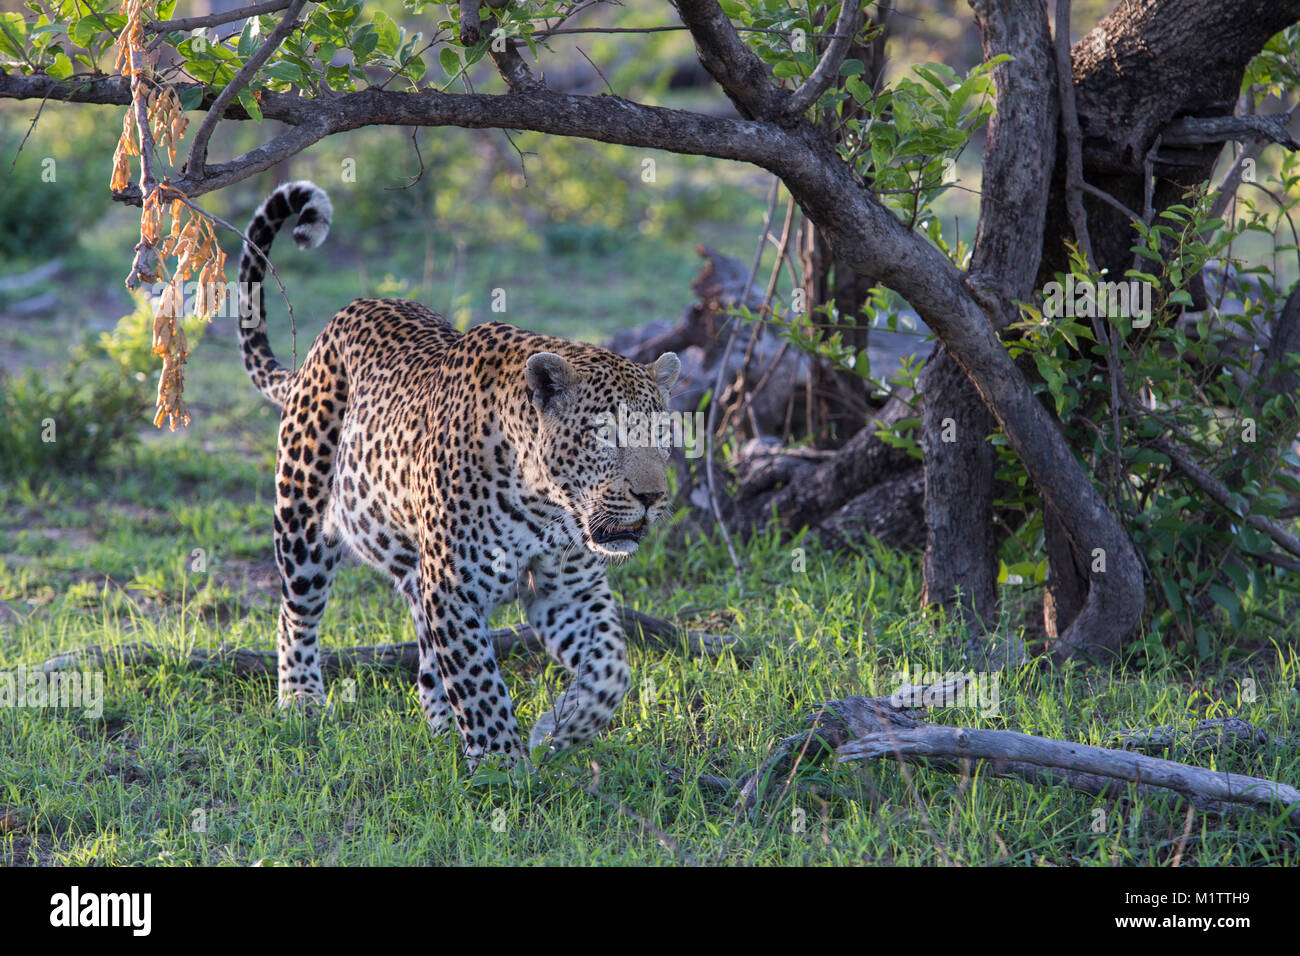 A full-grown adult male leopard (Pantehera pardus) walking in lush green grass Stock Photo